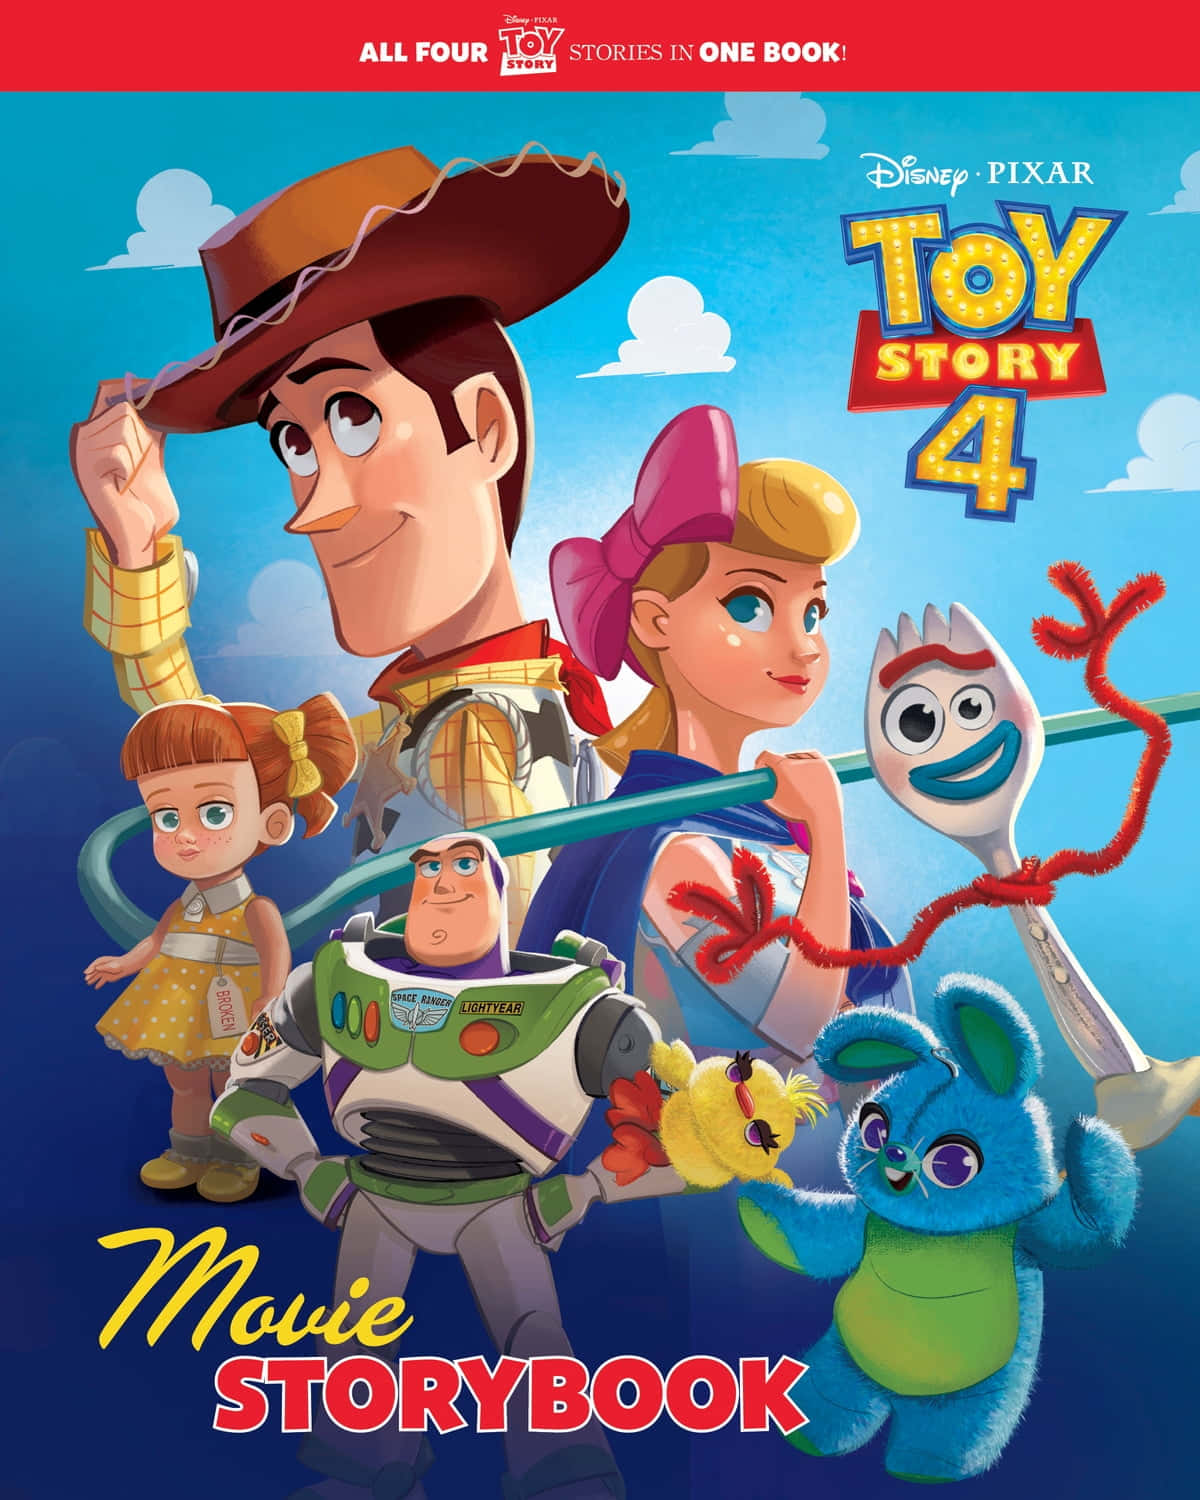 Buzzlightyear E Woody Intraprendono Una Nuova Avventura In Toy Story 4.